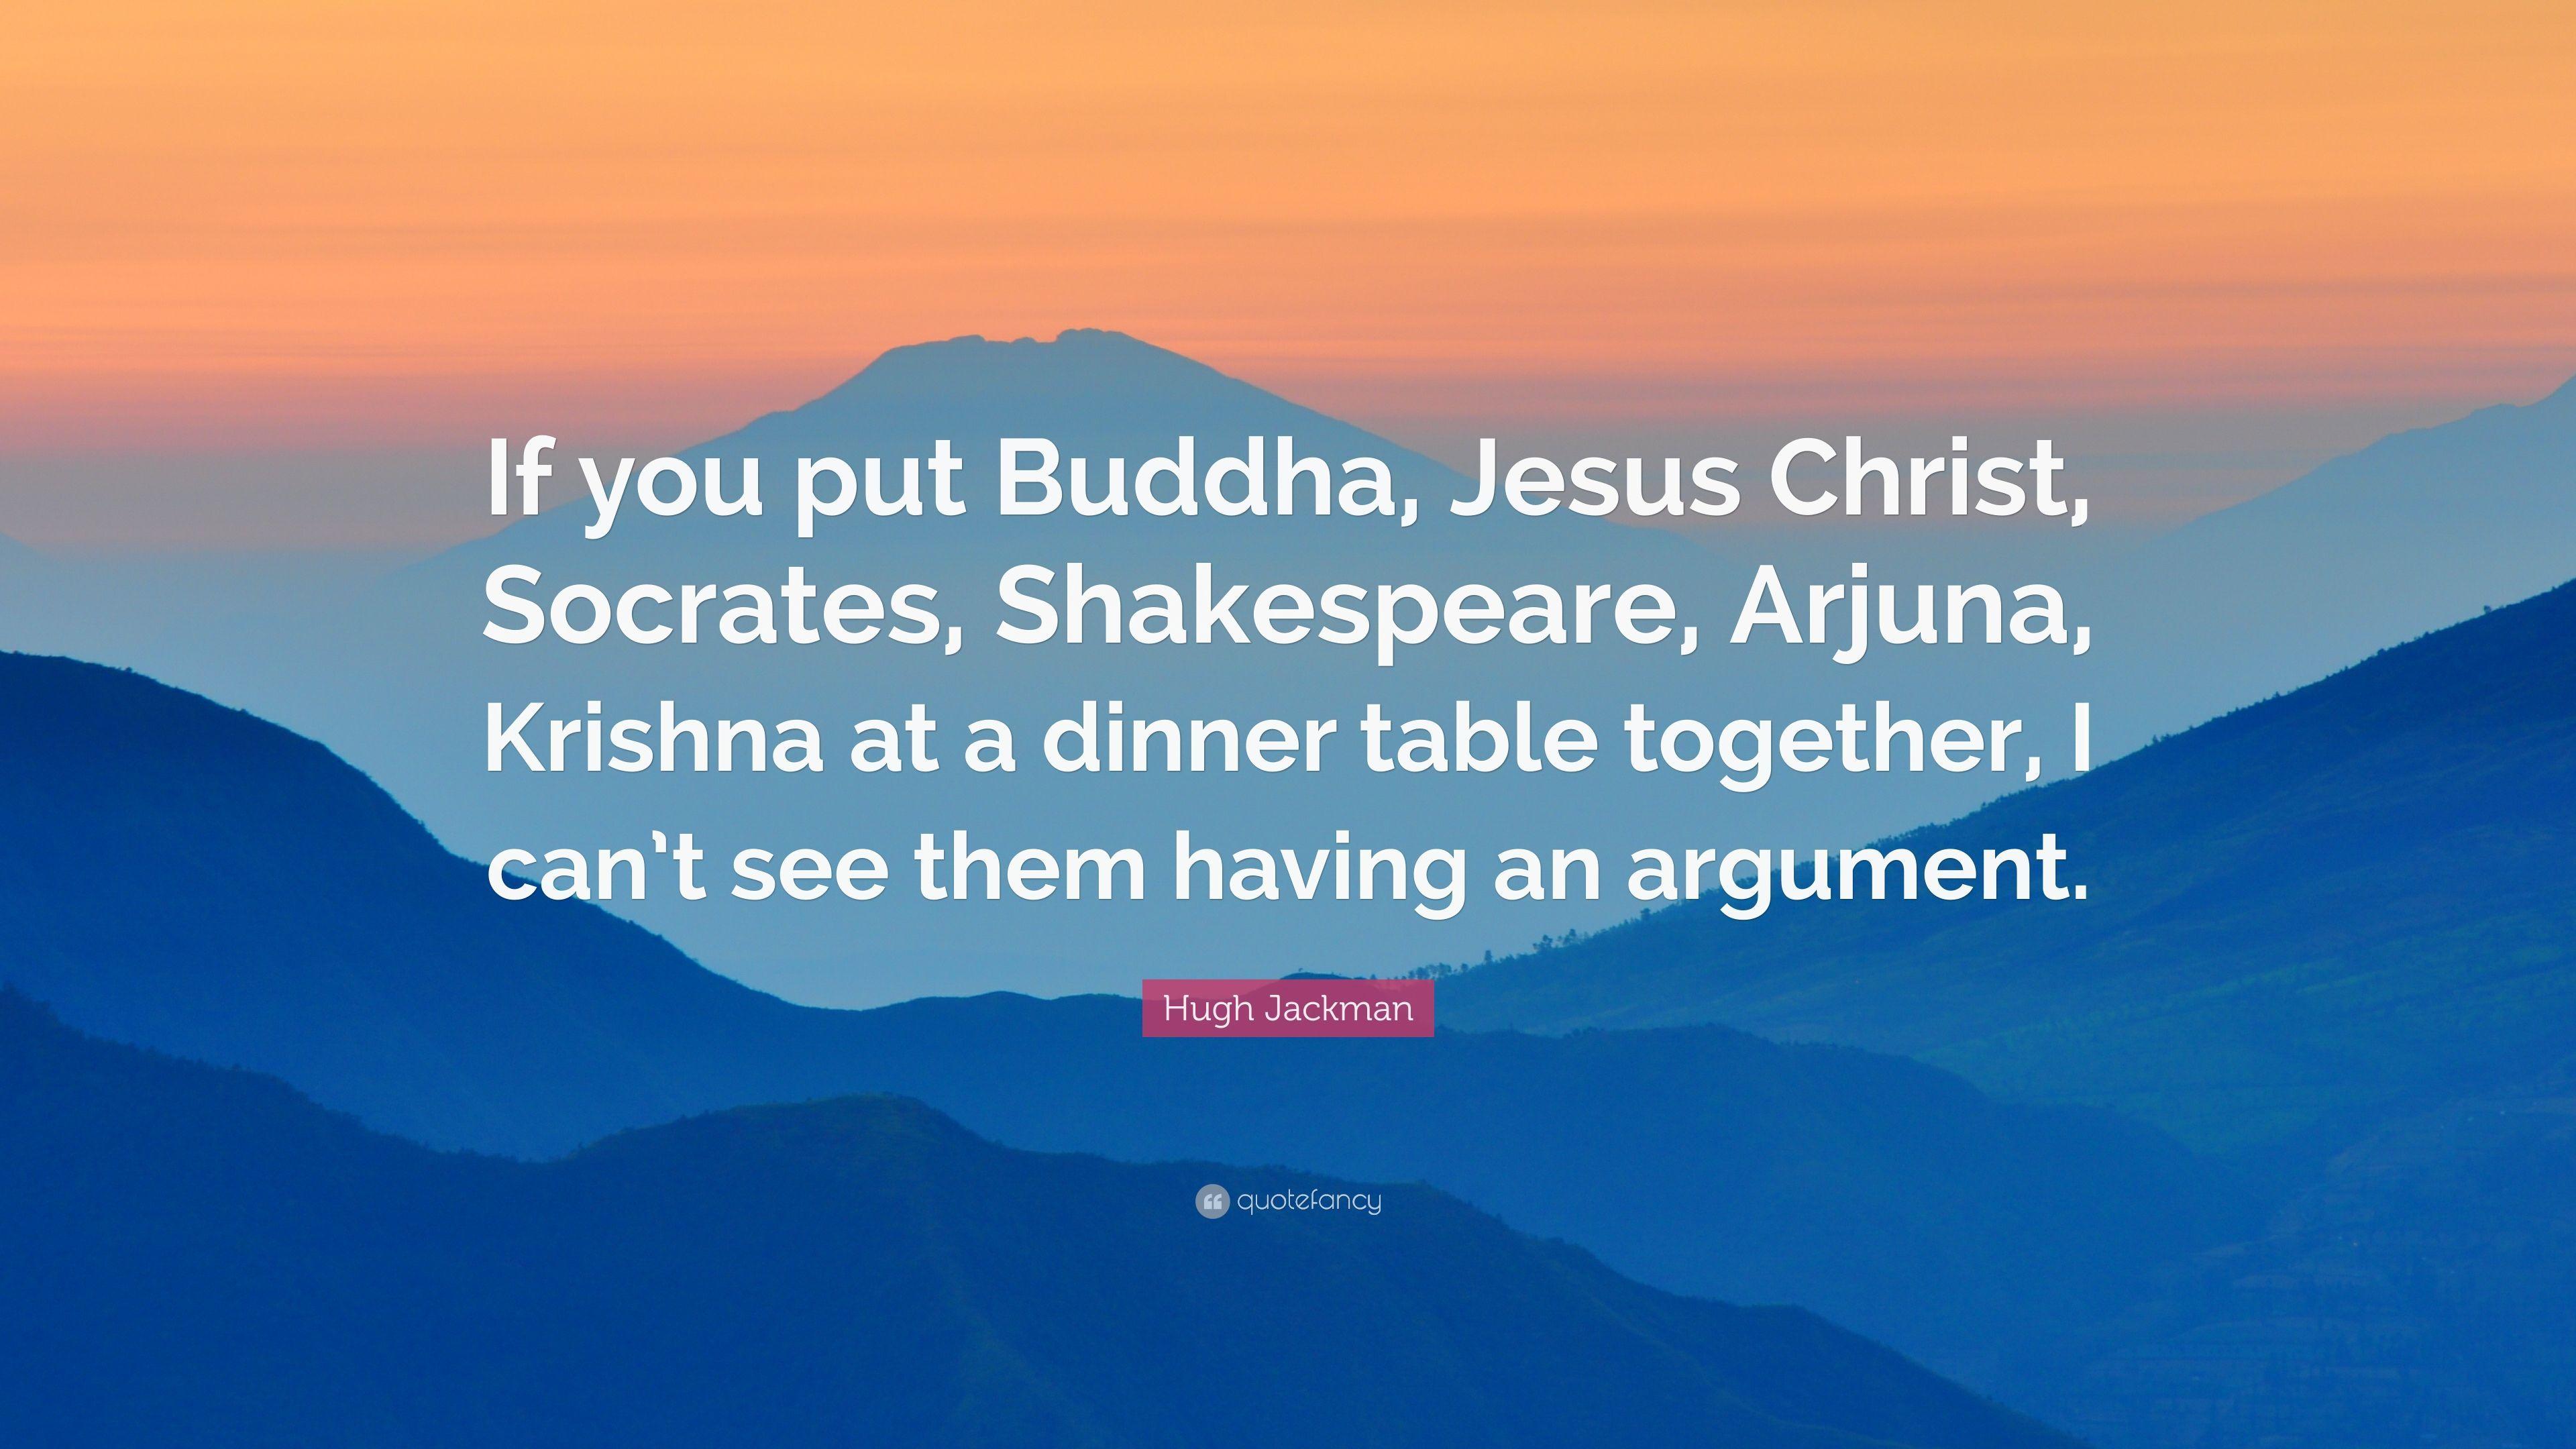 Hugh Jackman Quote: “If you put Buddha, Jesus Christ, Socrates